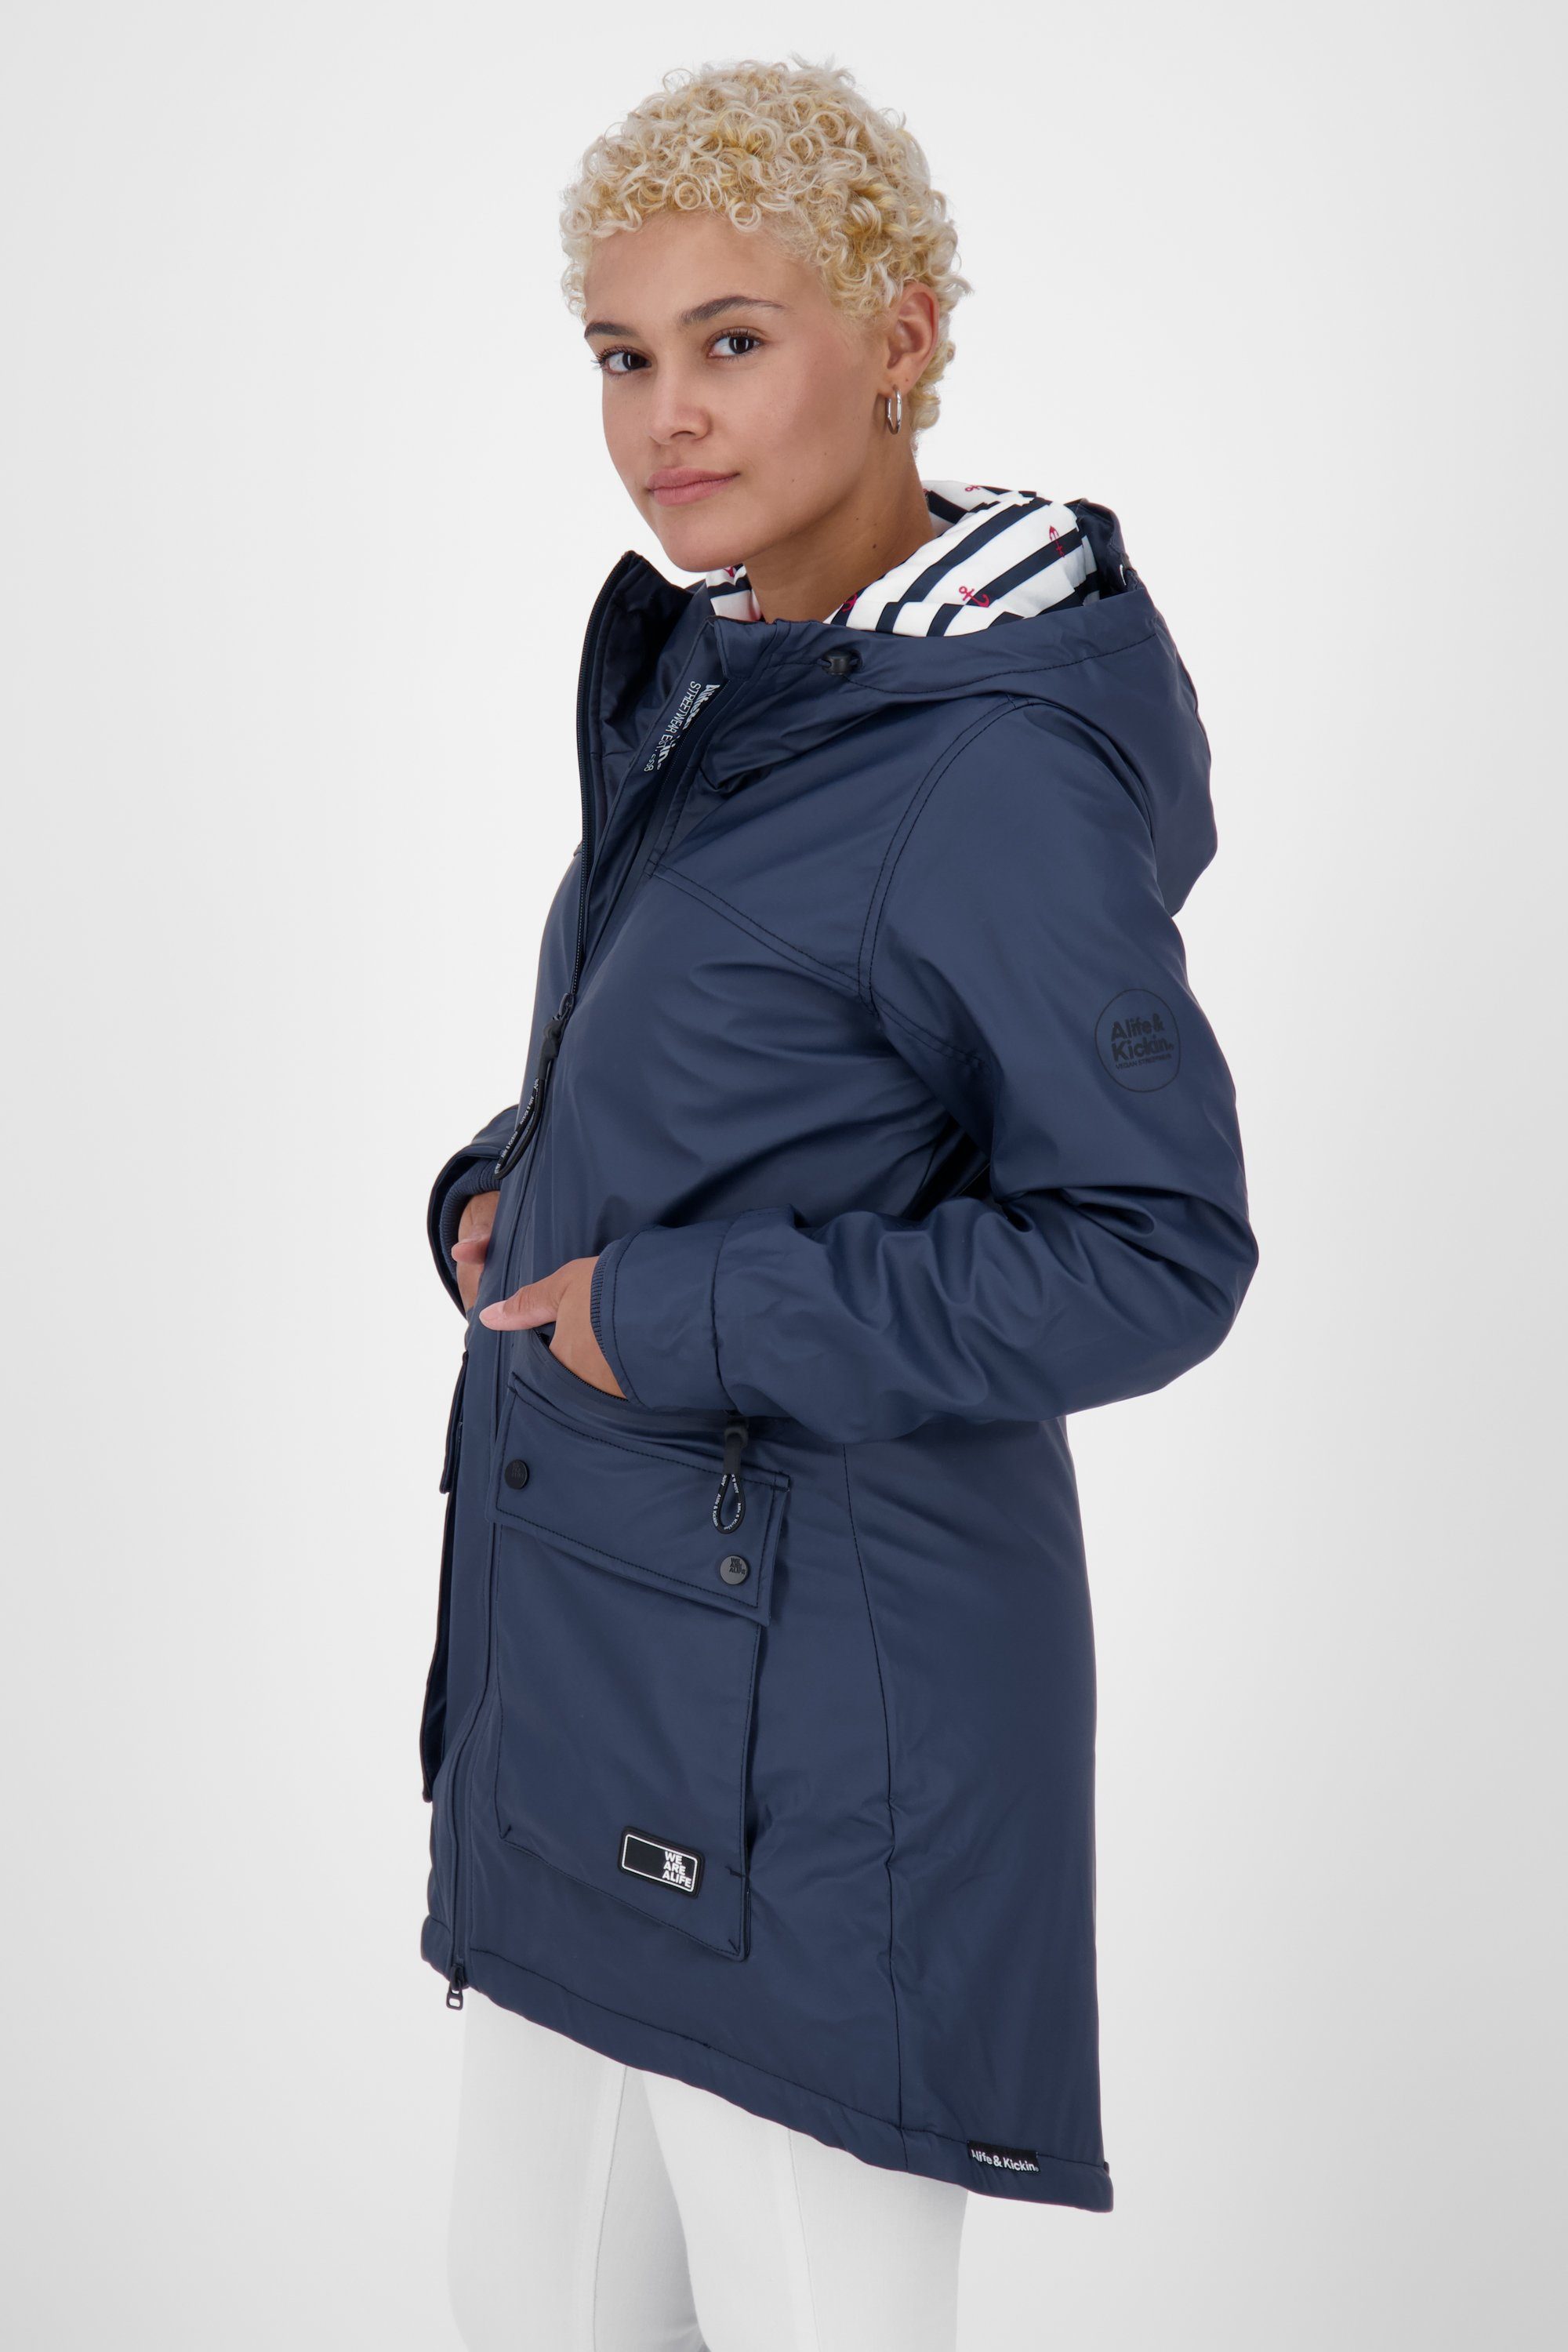 Rainstyle AudreyAK marine Coat Langjacke Kickin & Damen A Langjacke, Alife Übergangsjacke